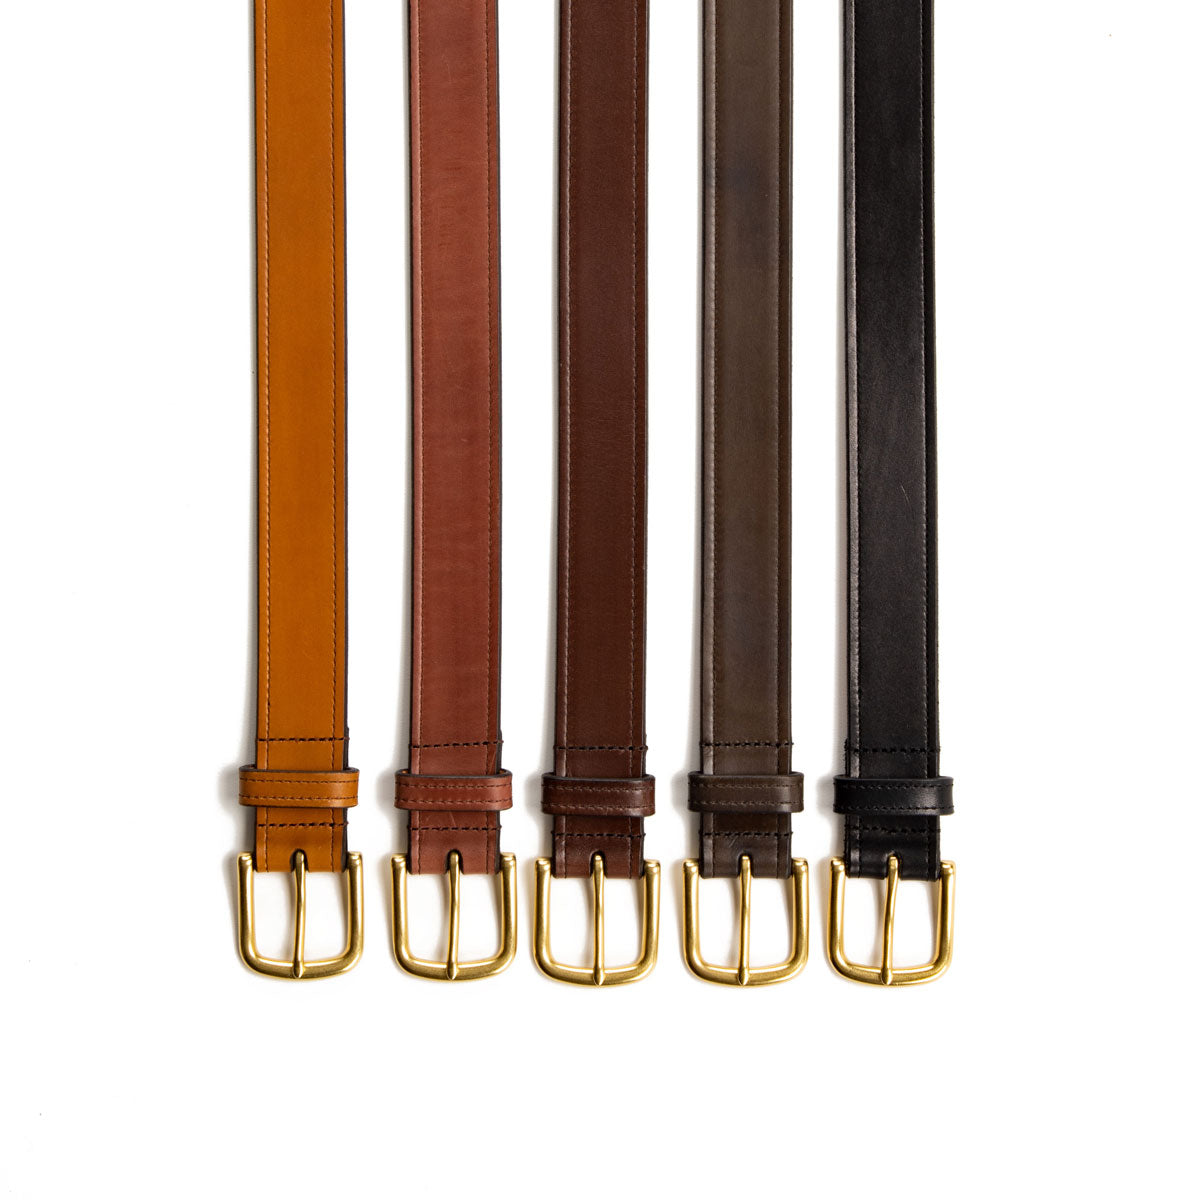 Black grained calfskin belt - Luxury custom-made belts